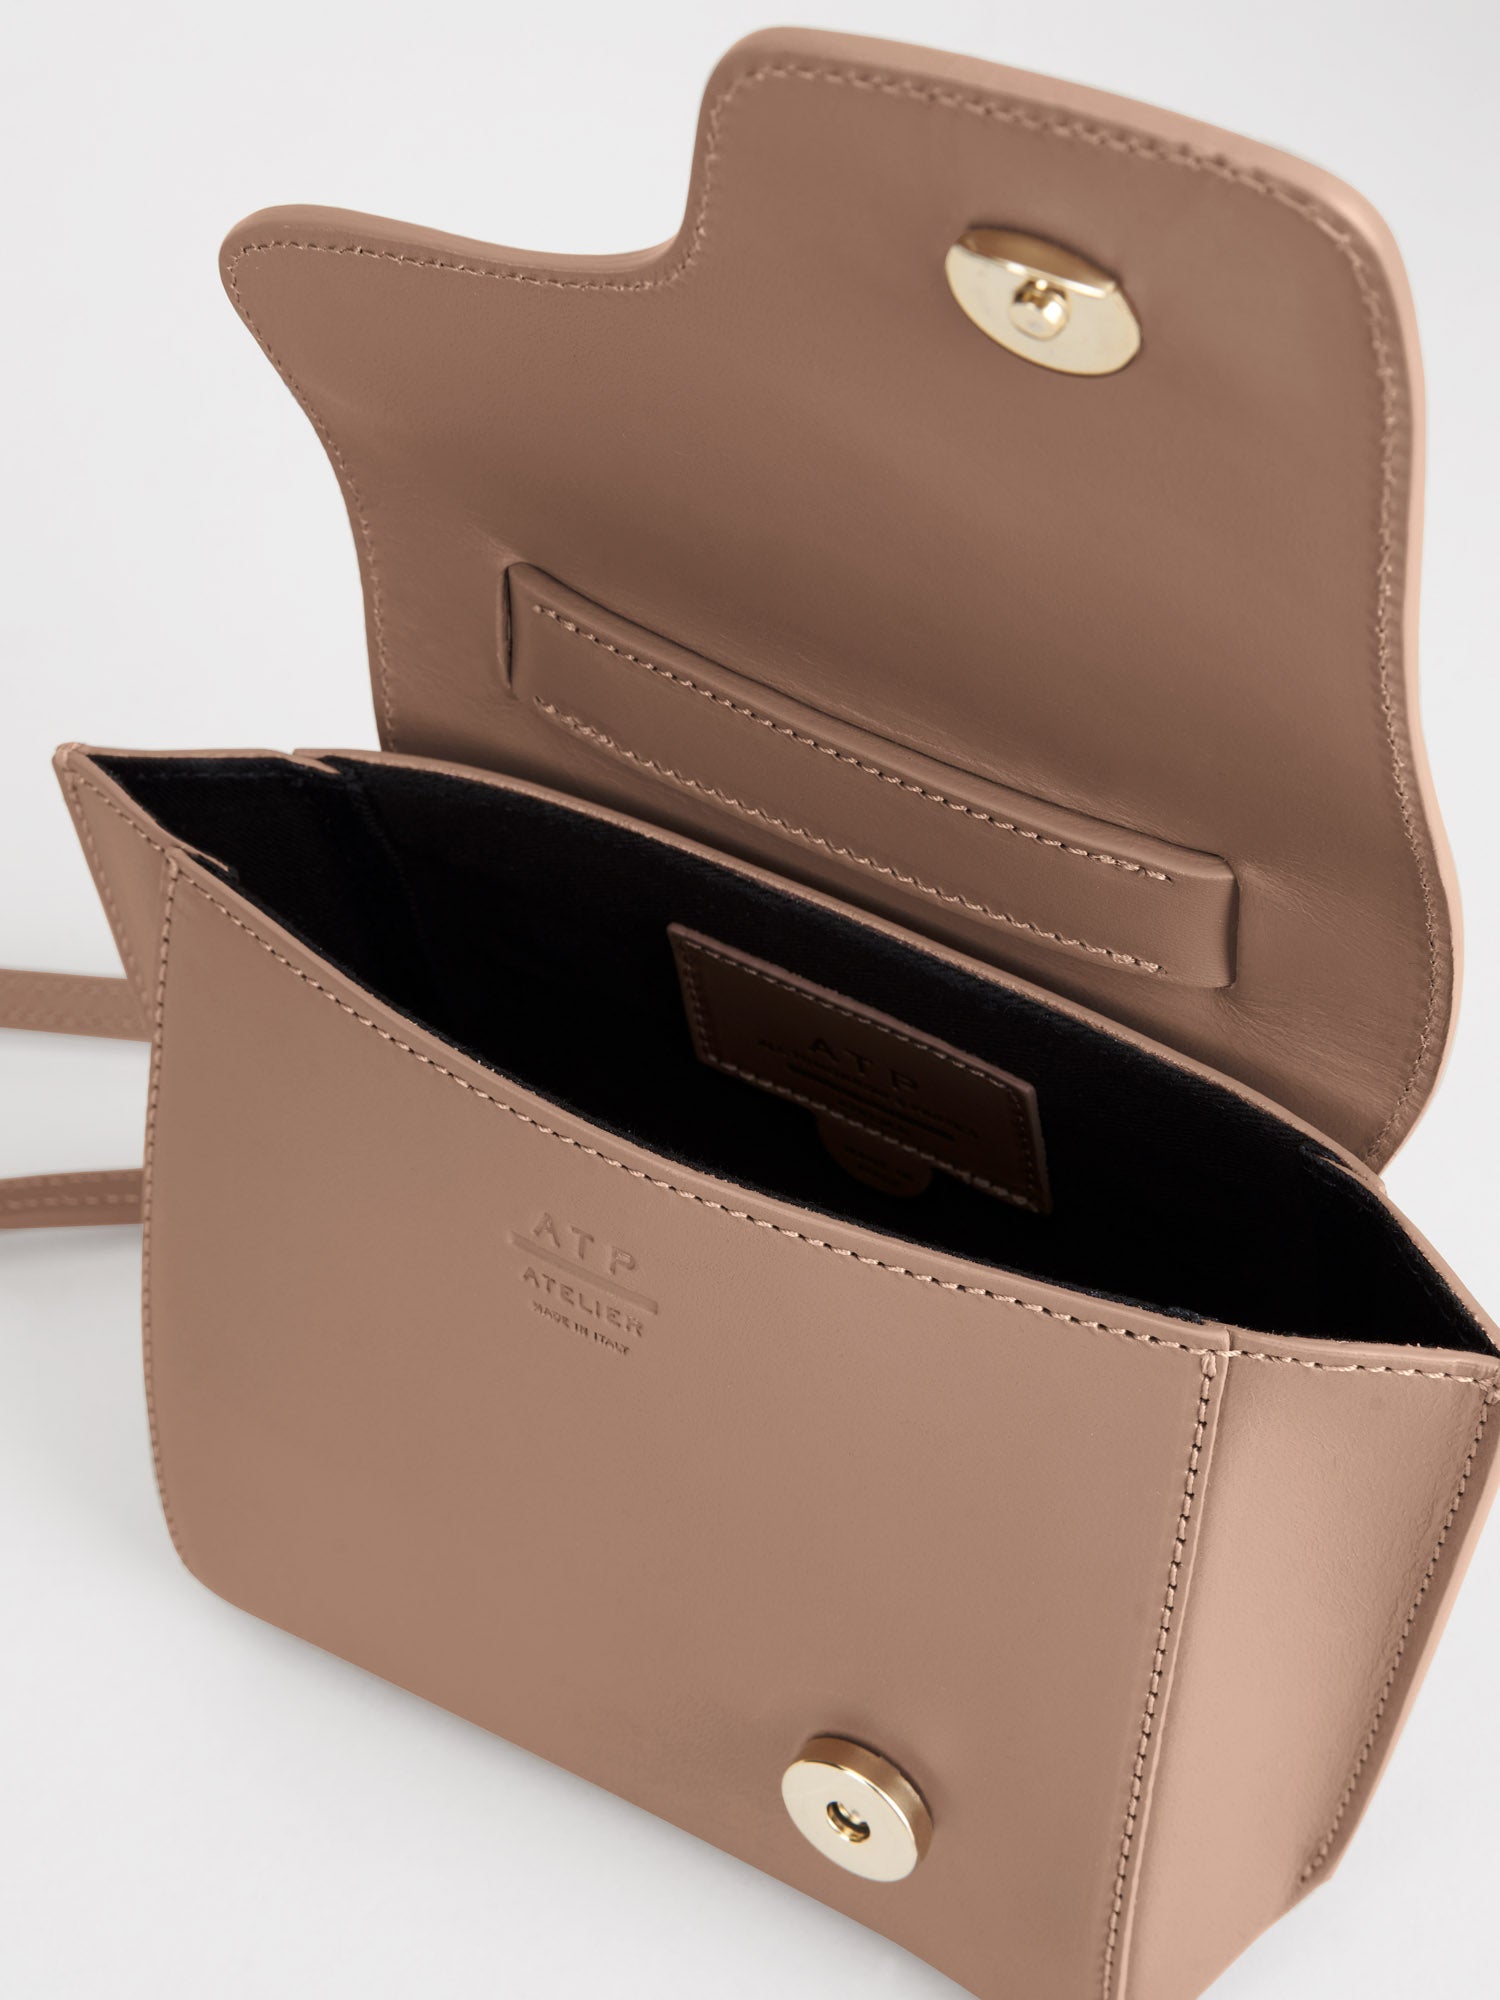 Montalcino Hazelnut Leather Mini handbag